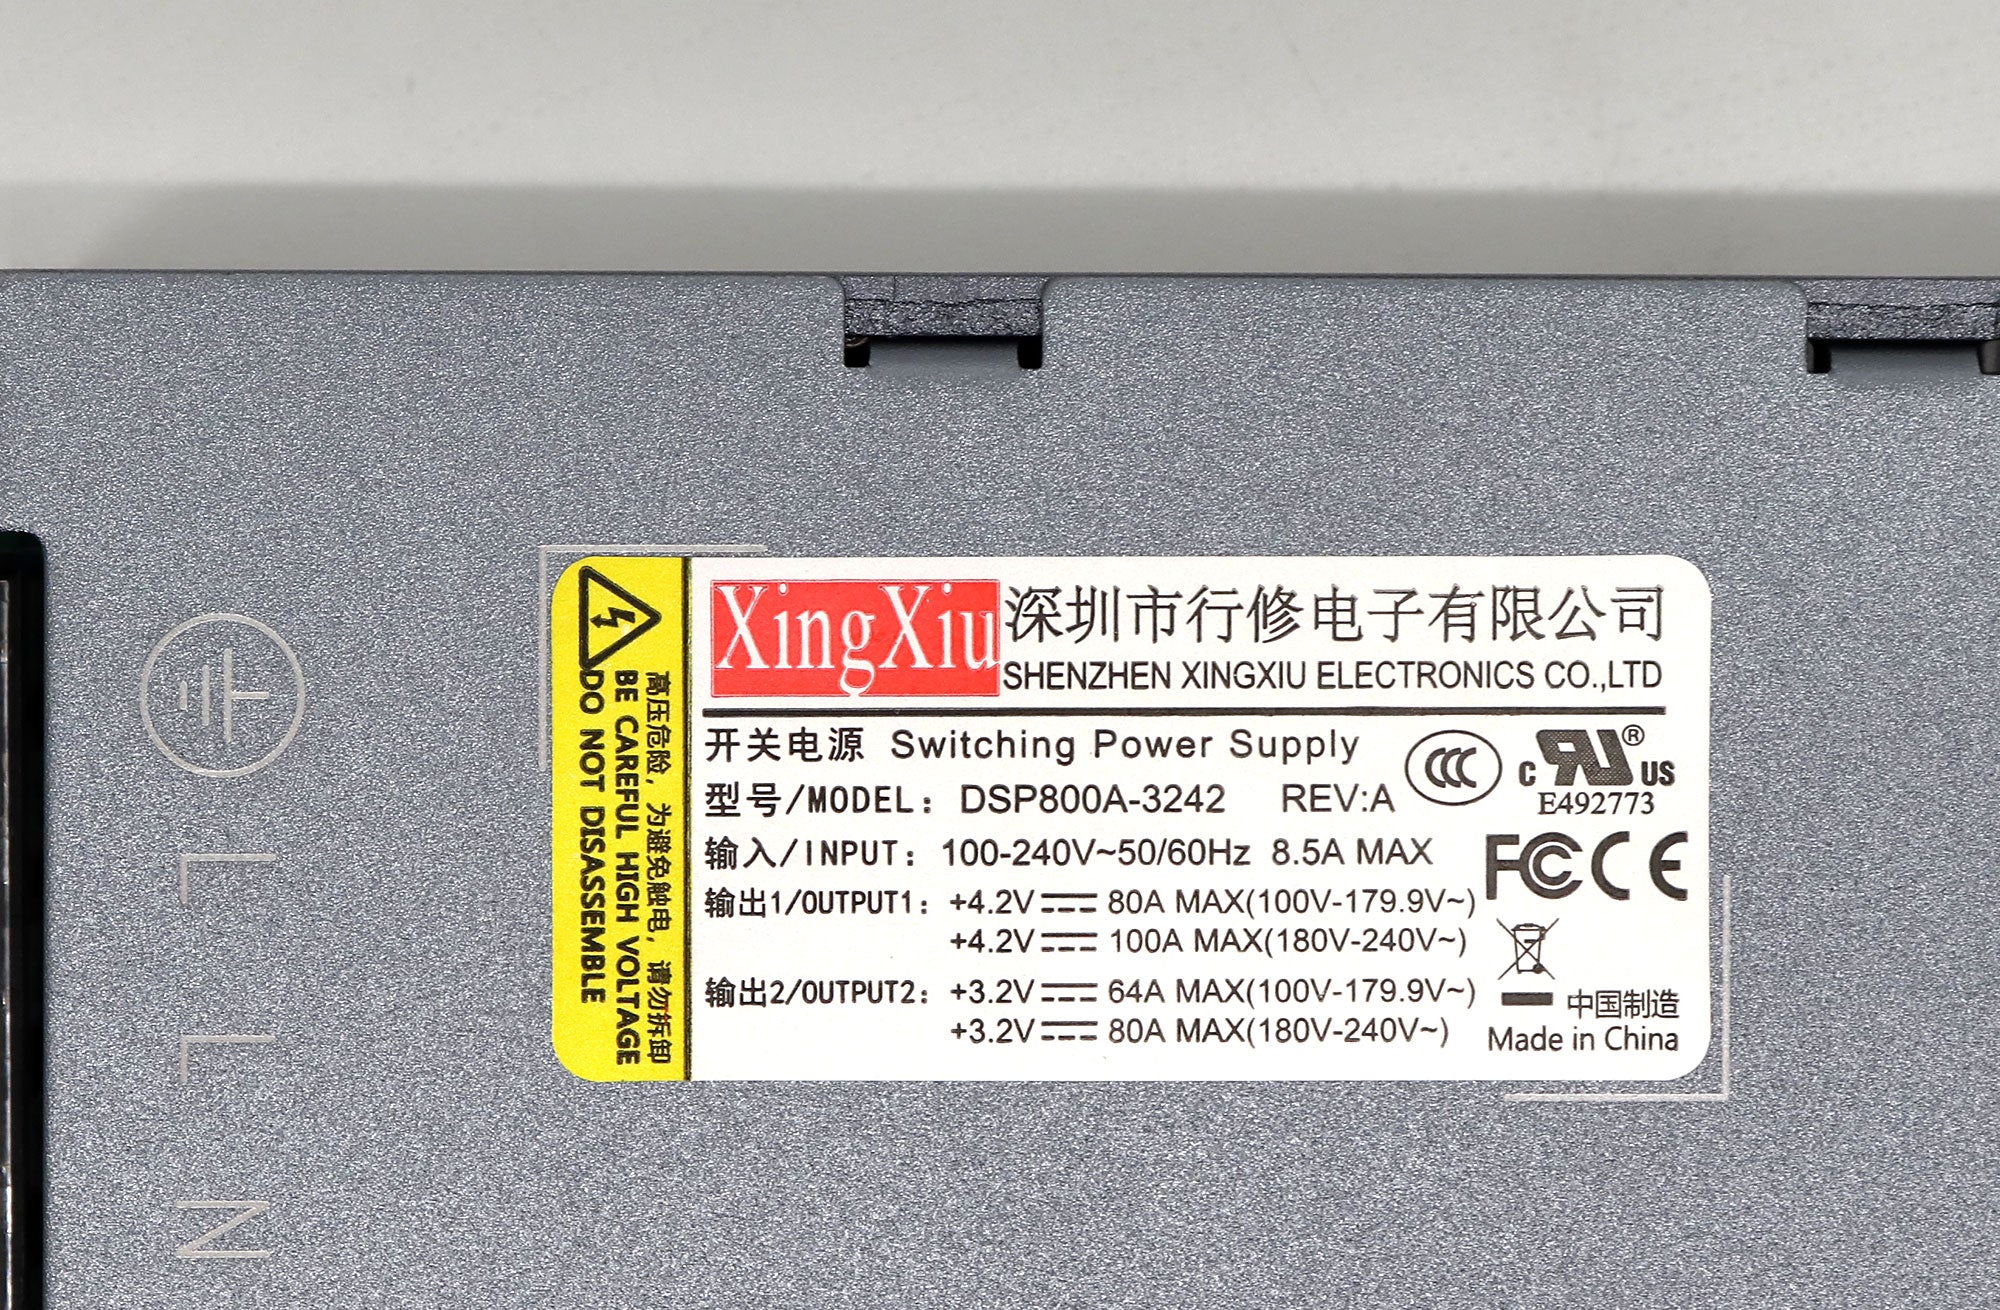 XINGXIU DSP800A-3242 LED Display Dual Output Power Supply